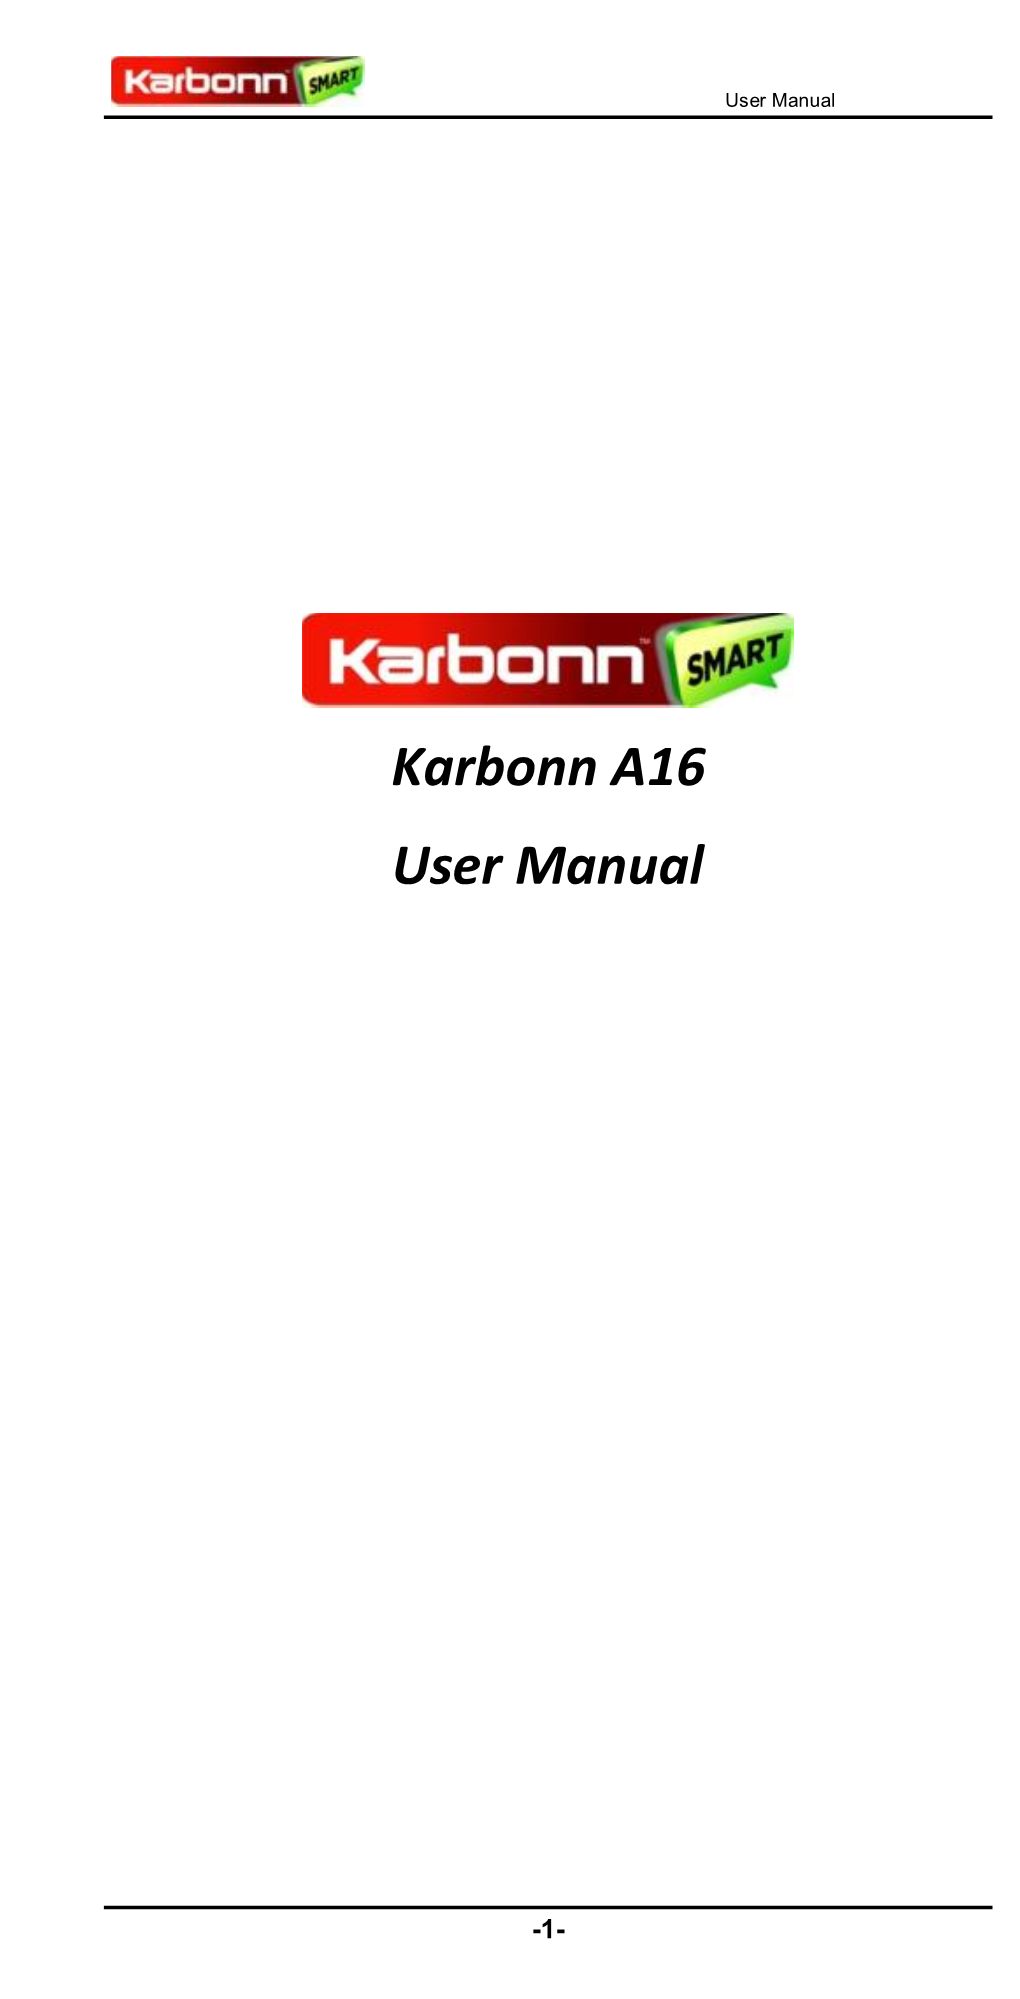 Karbonn A16 User Manual